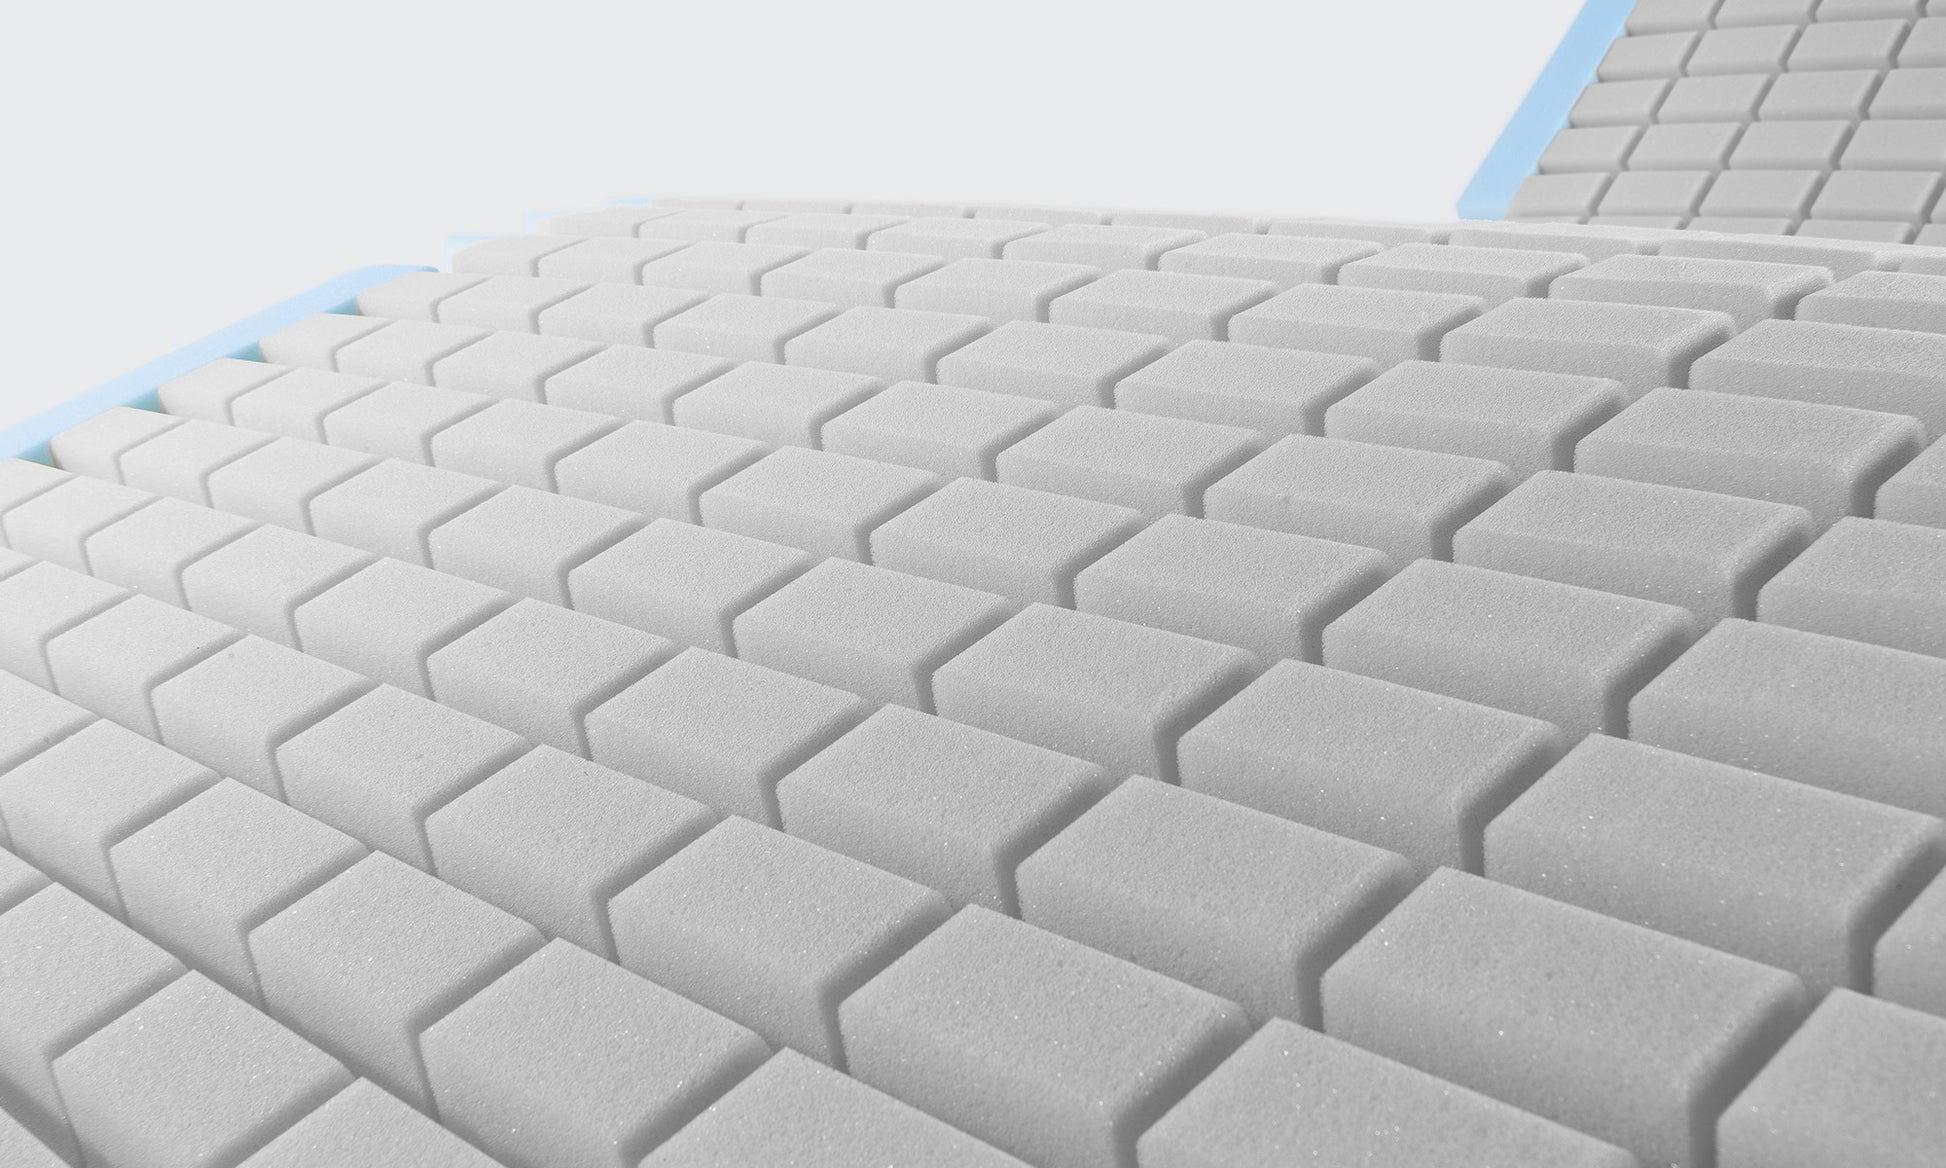 close up of the foam mattress